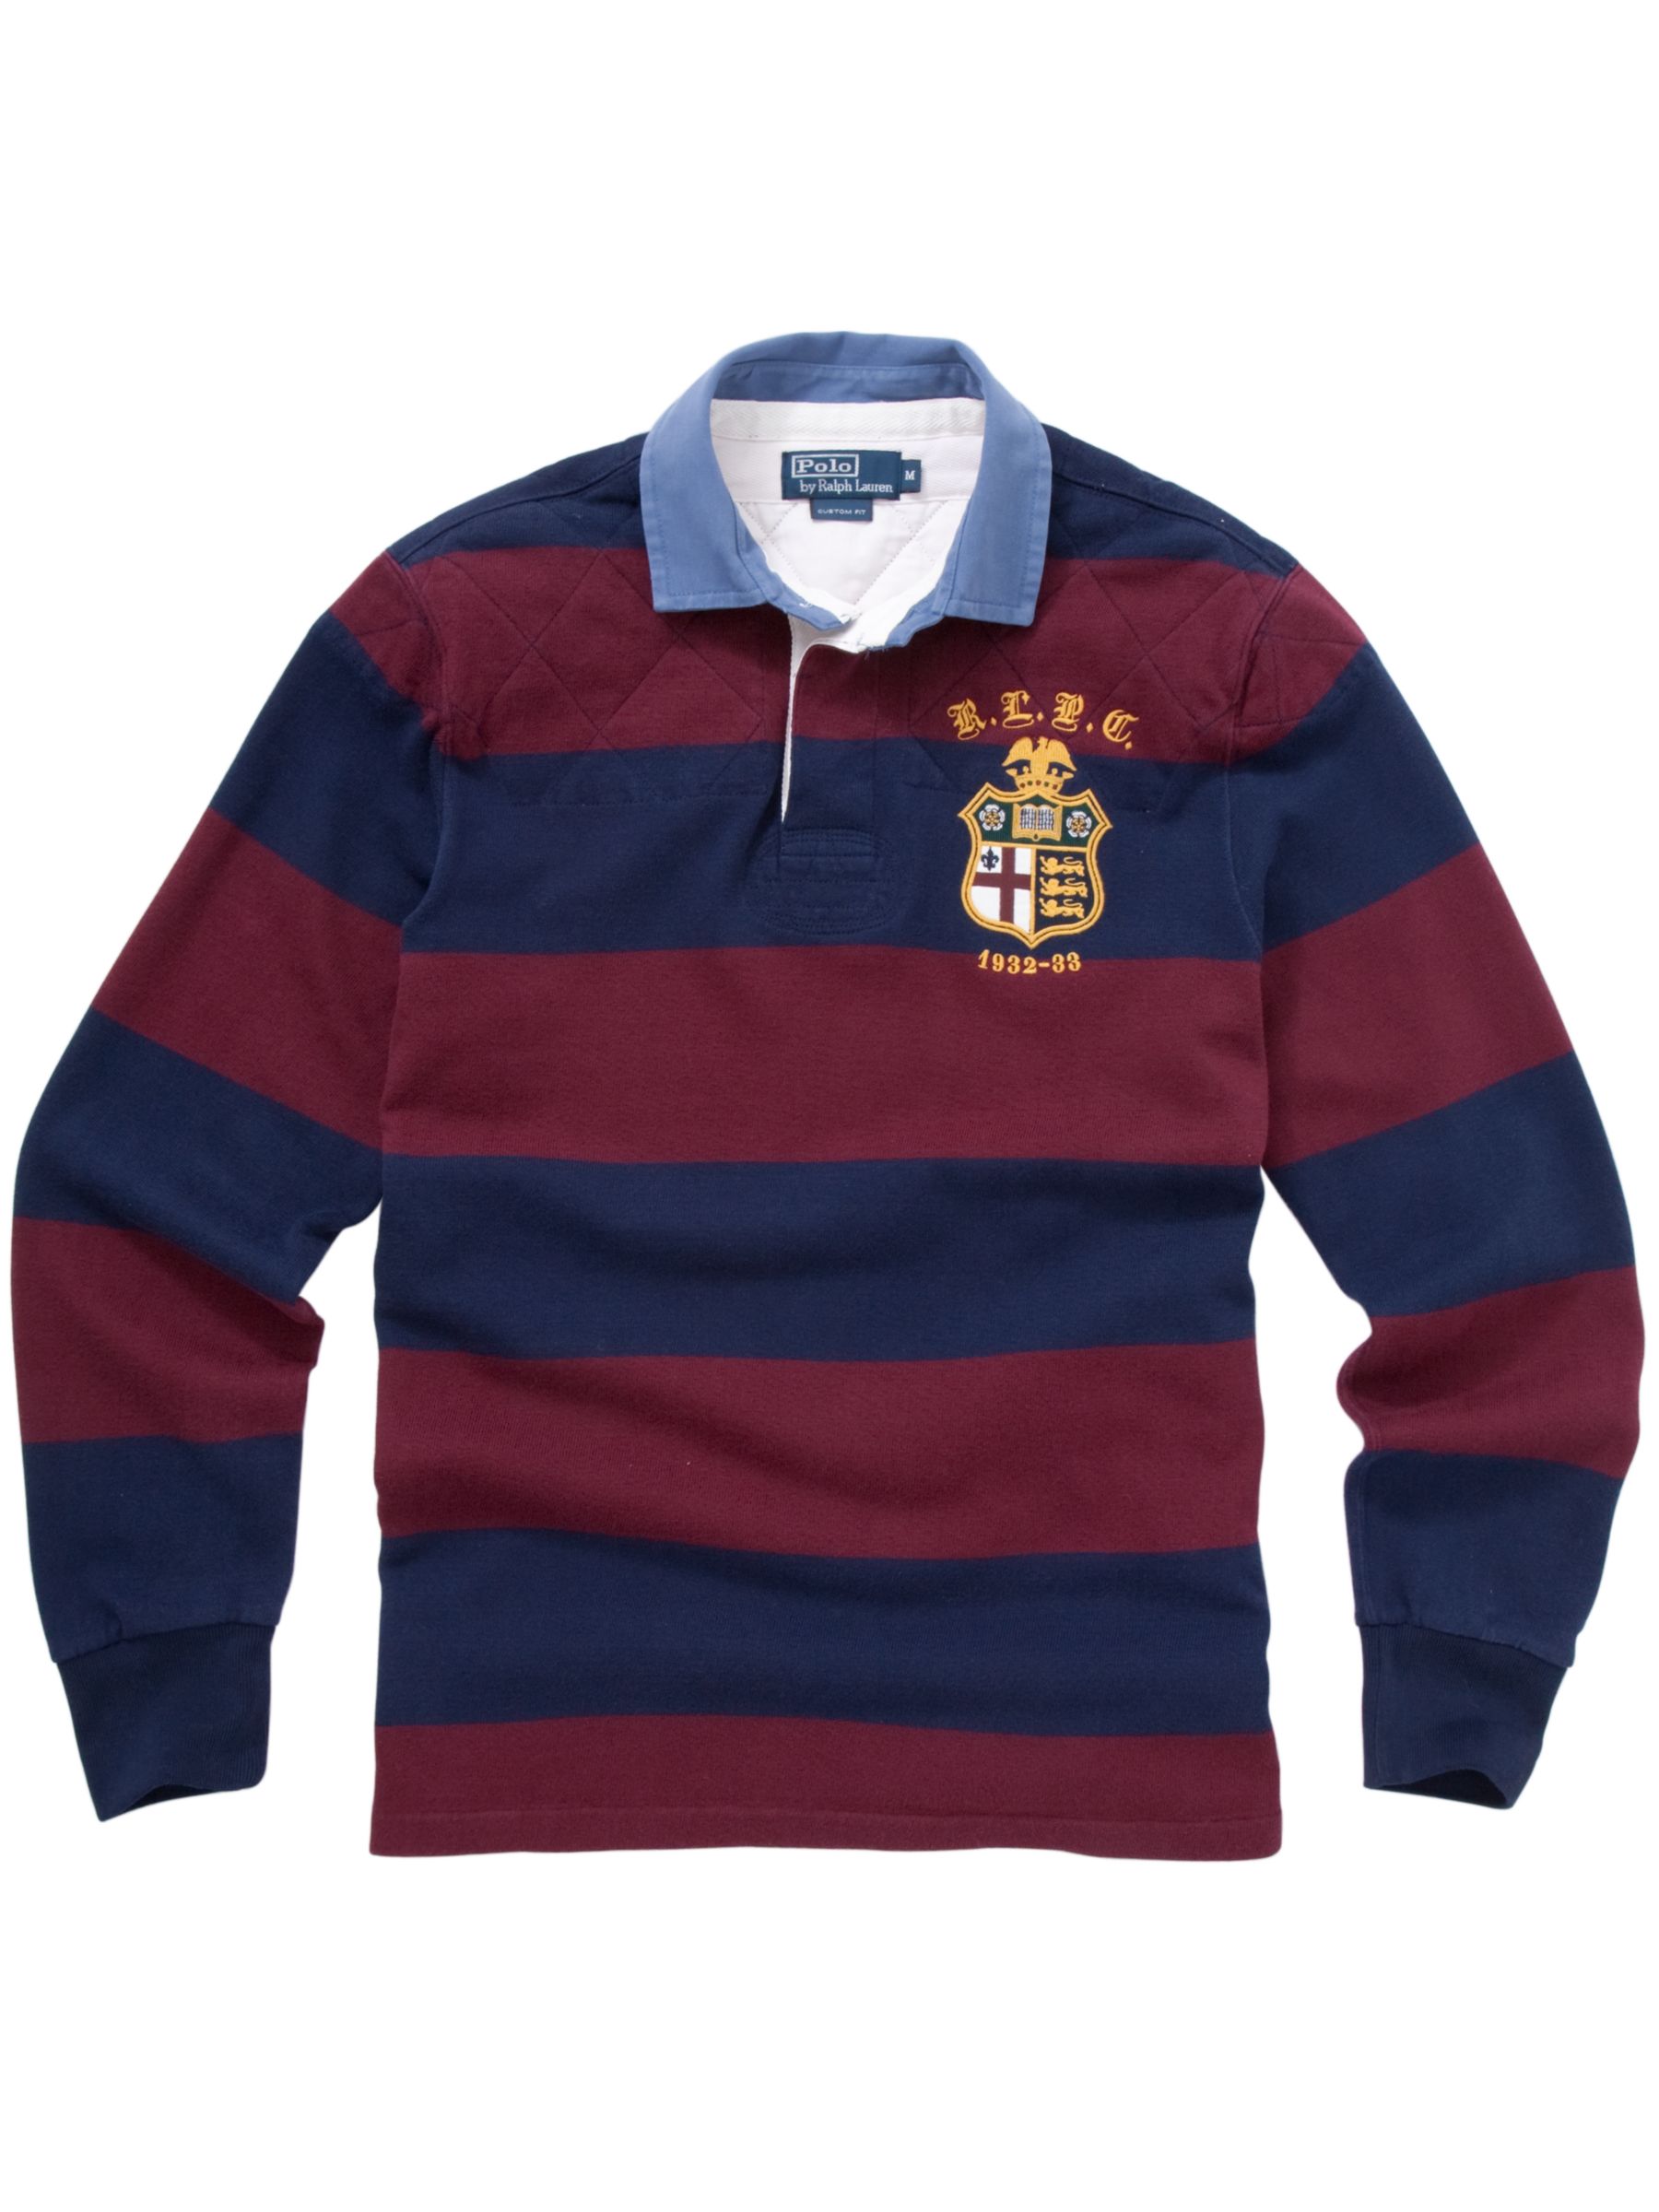 Stripe Rugby Shirt, Cruise